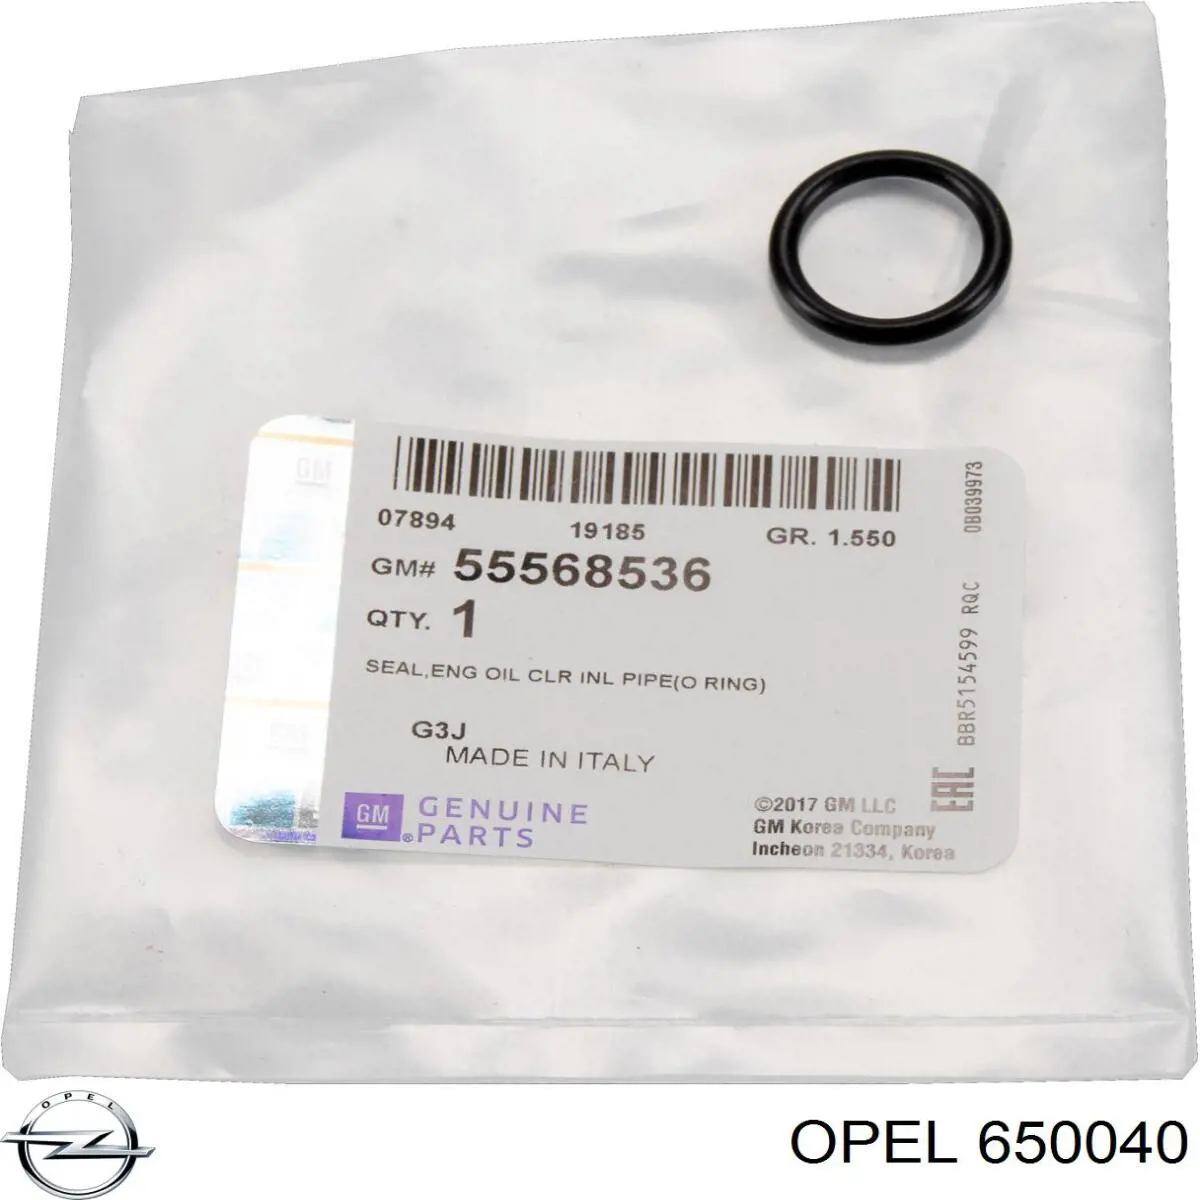 650040 Opel vedante de adaptador do filtro de óleo